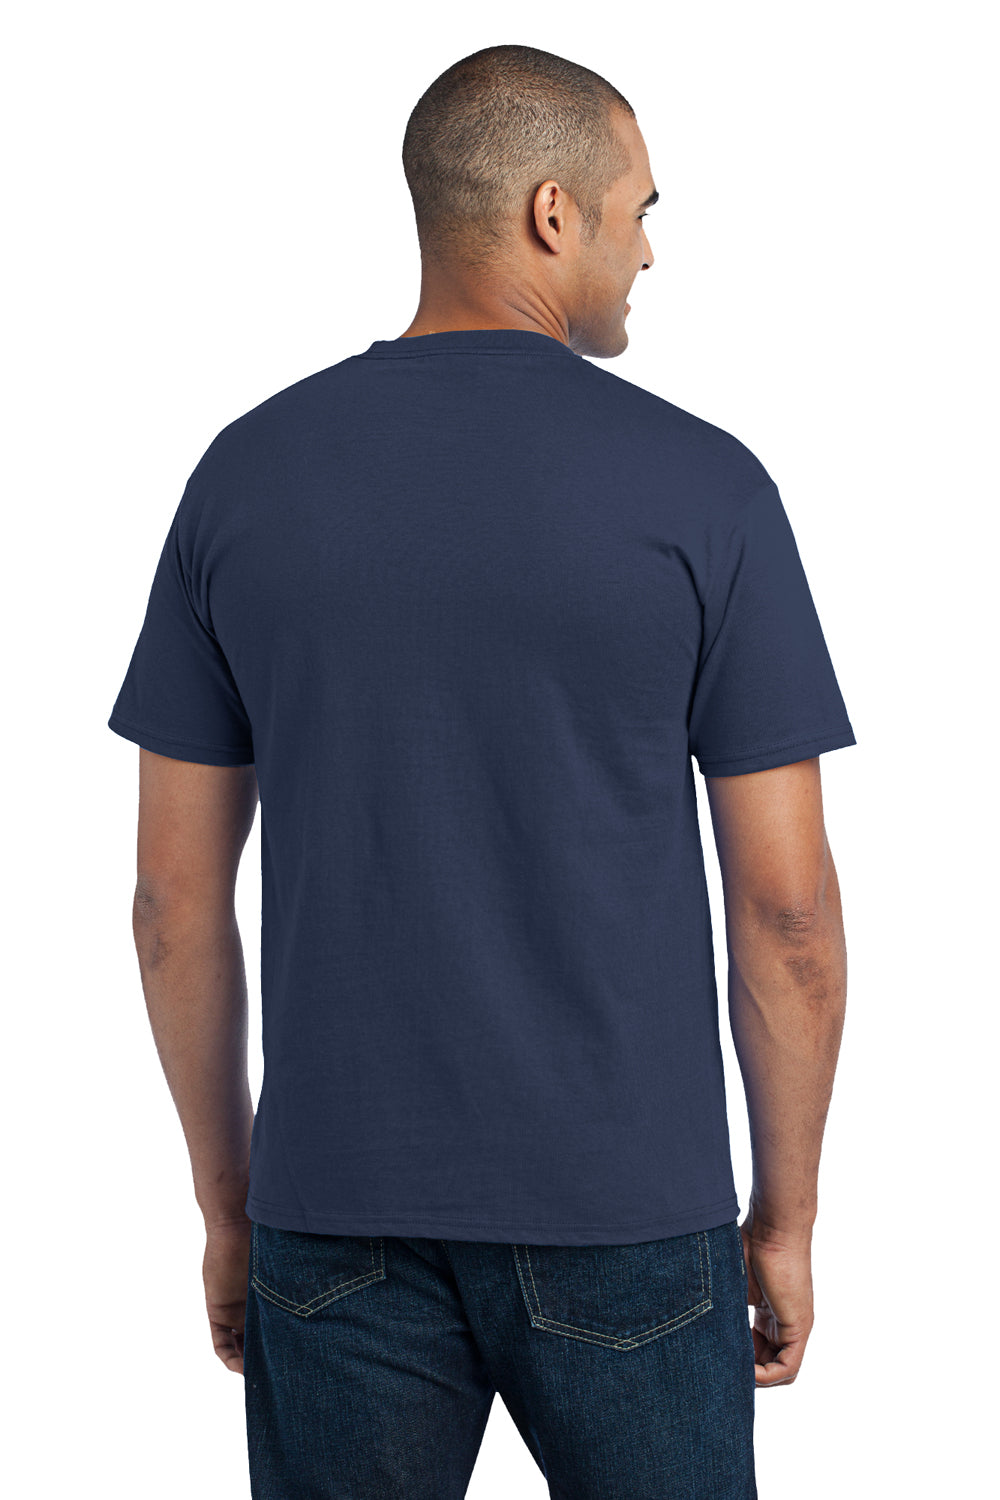 Port & Company PC55P Mens Core Short Sleeve Crewneck T-Shirt w/ Pocket Navy Blue Back